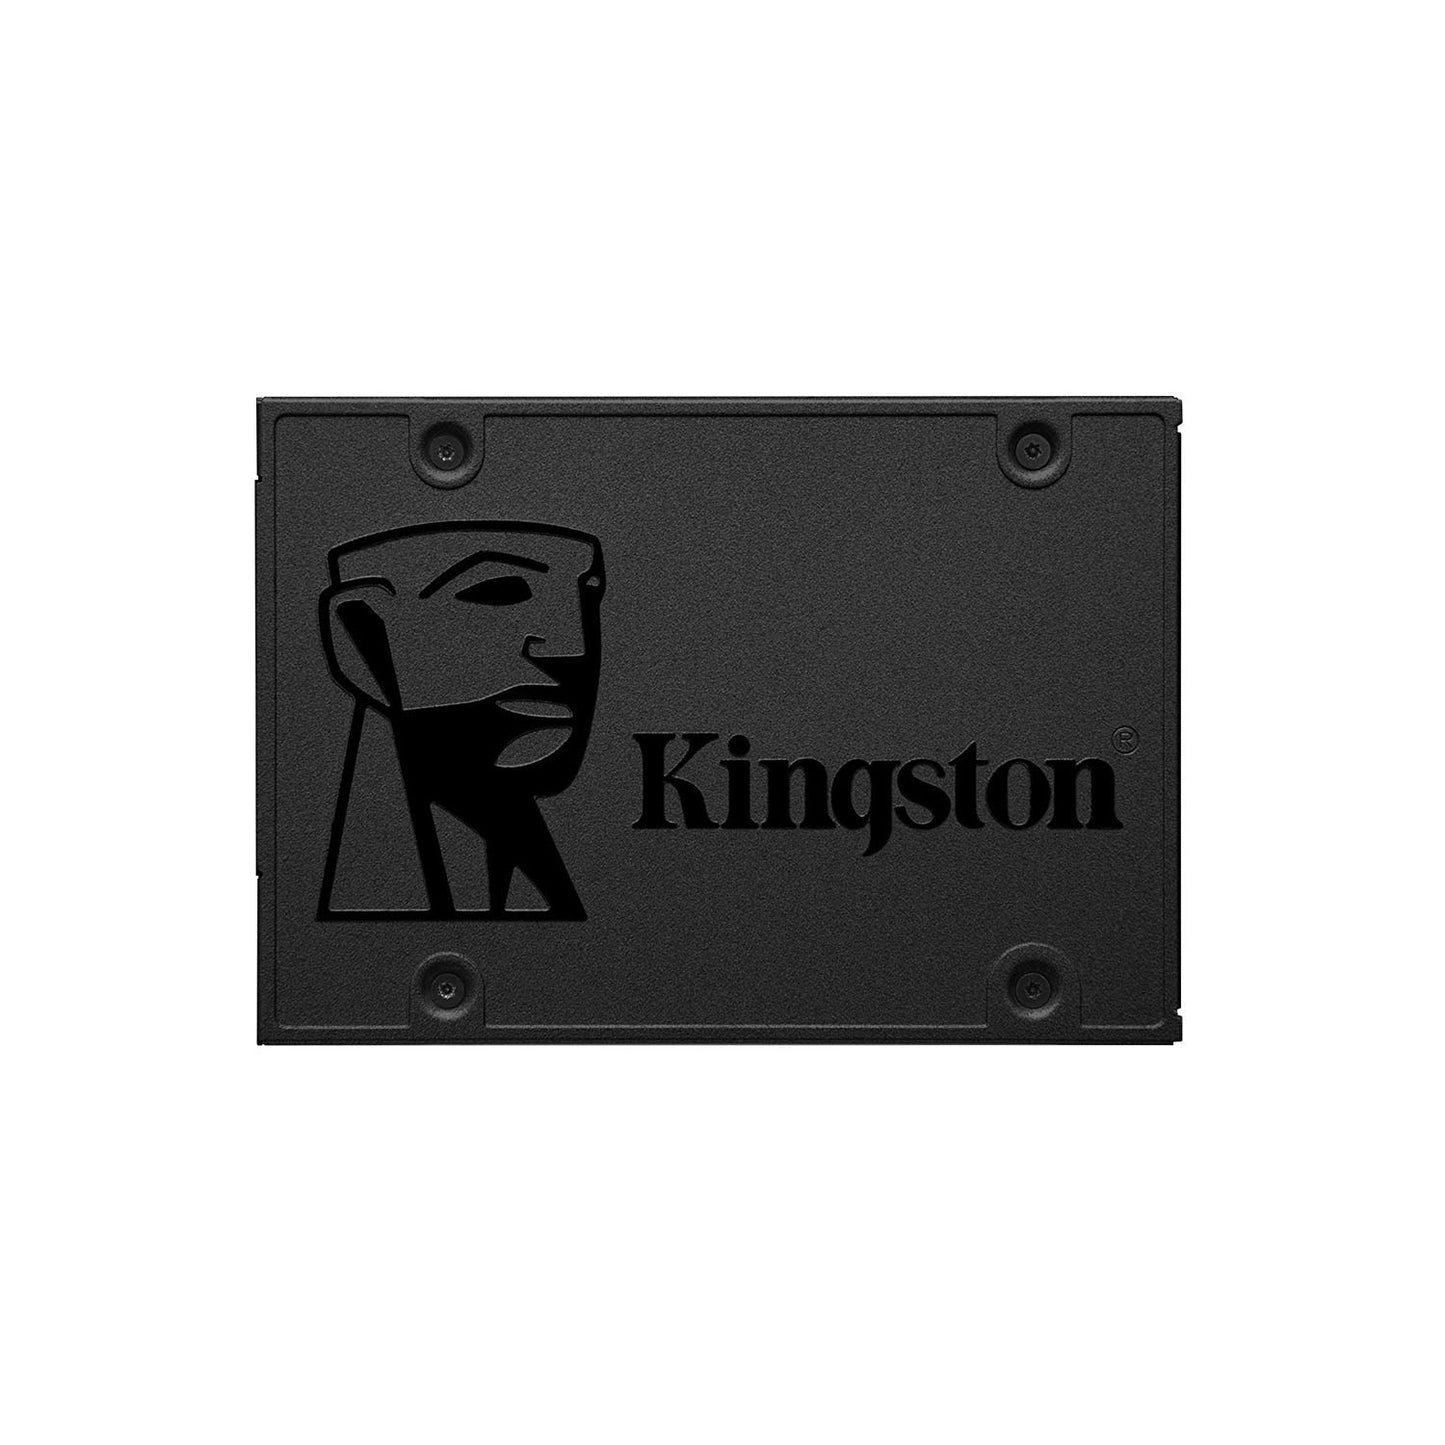 Kingston A400 480GB 2.5-inch SATA Internal Solid State Drive